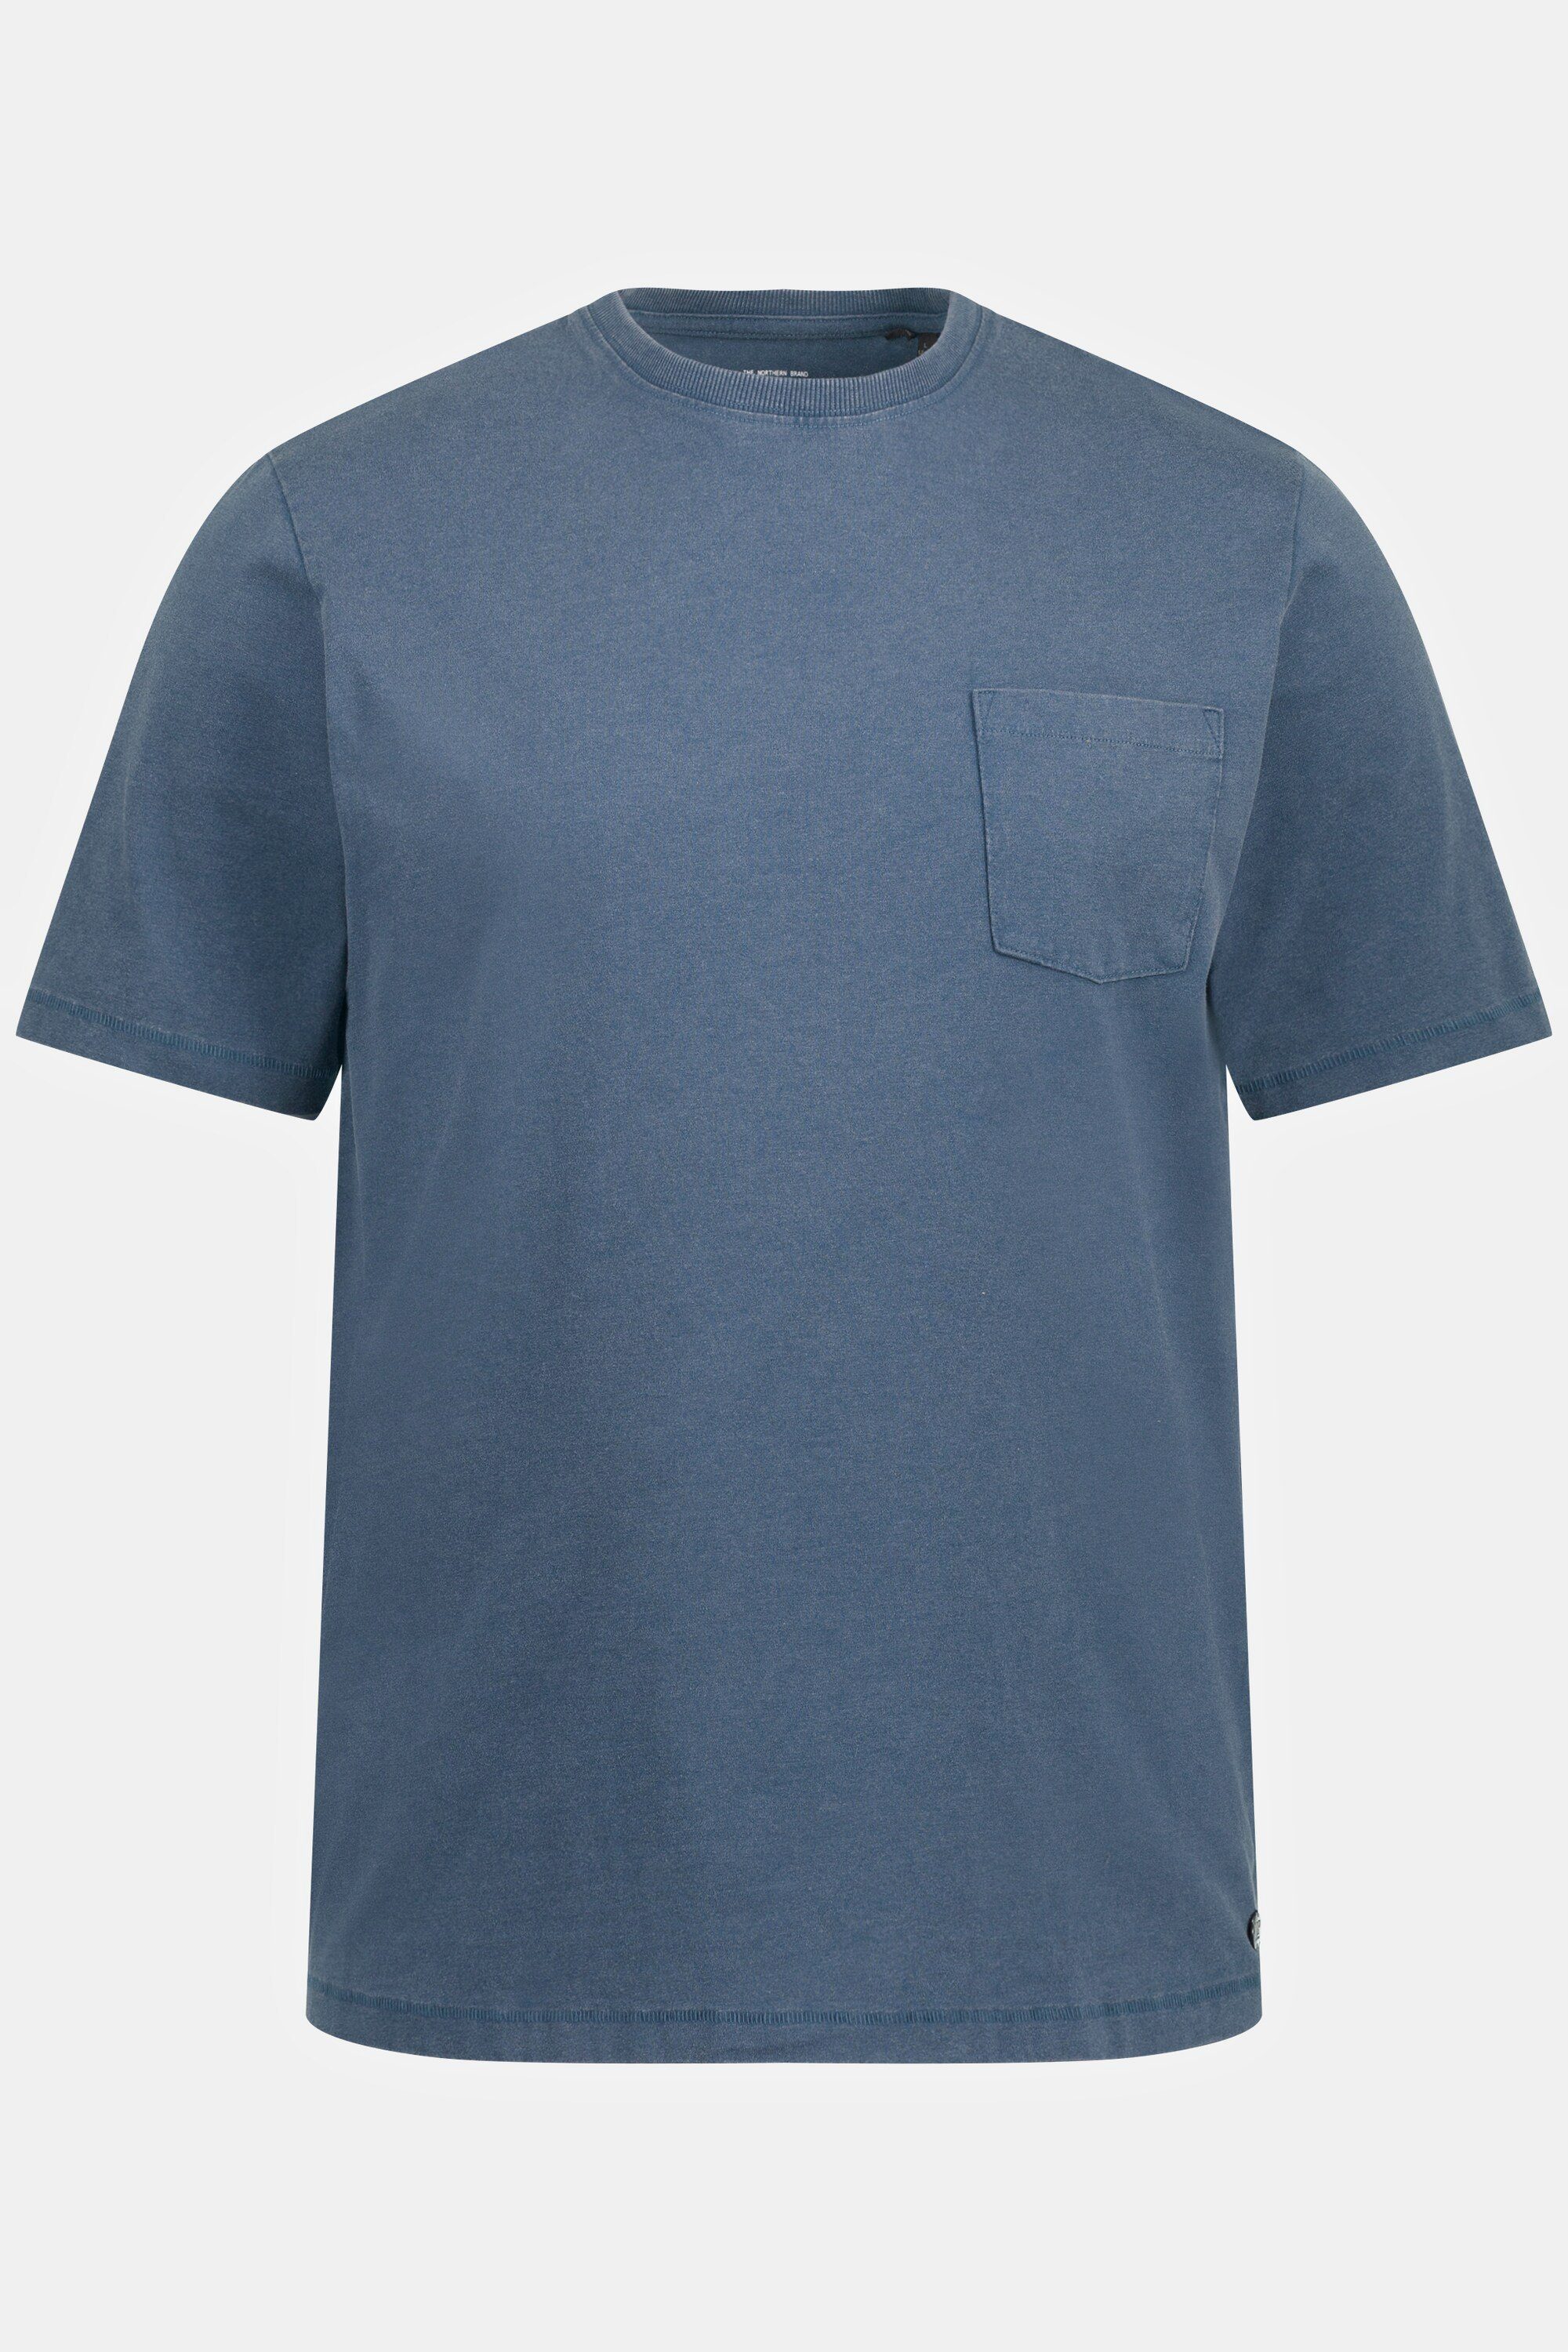 JP1880 T-Shirt T-Shirt Biobaumwolle blue washed denim acid Flammjersey